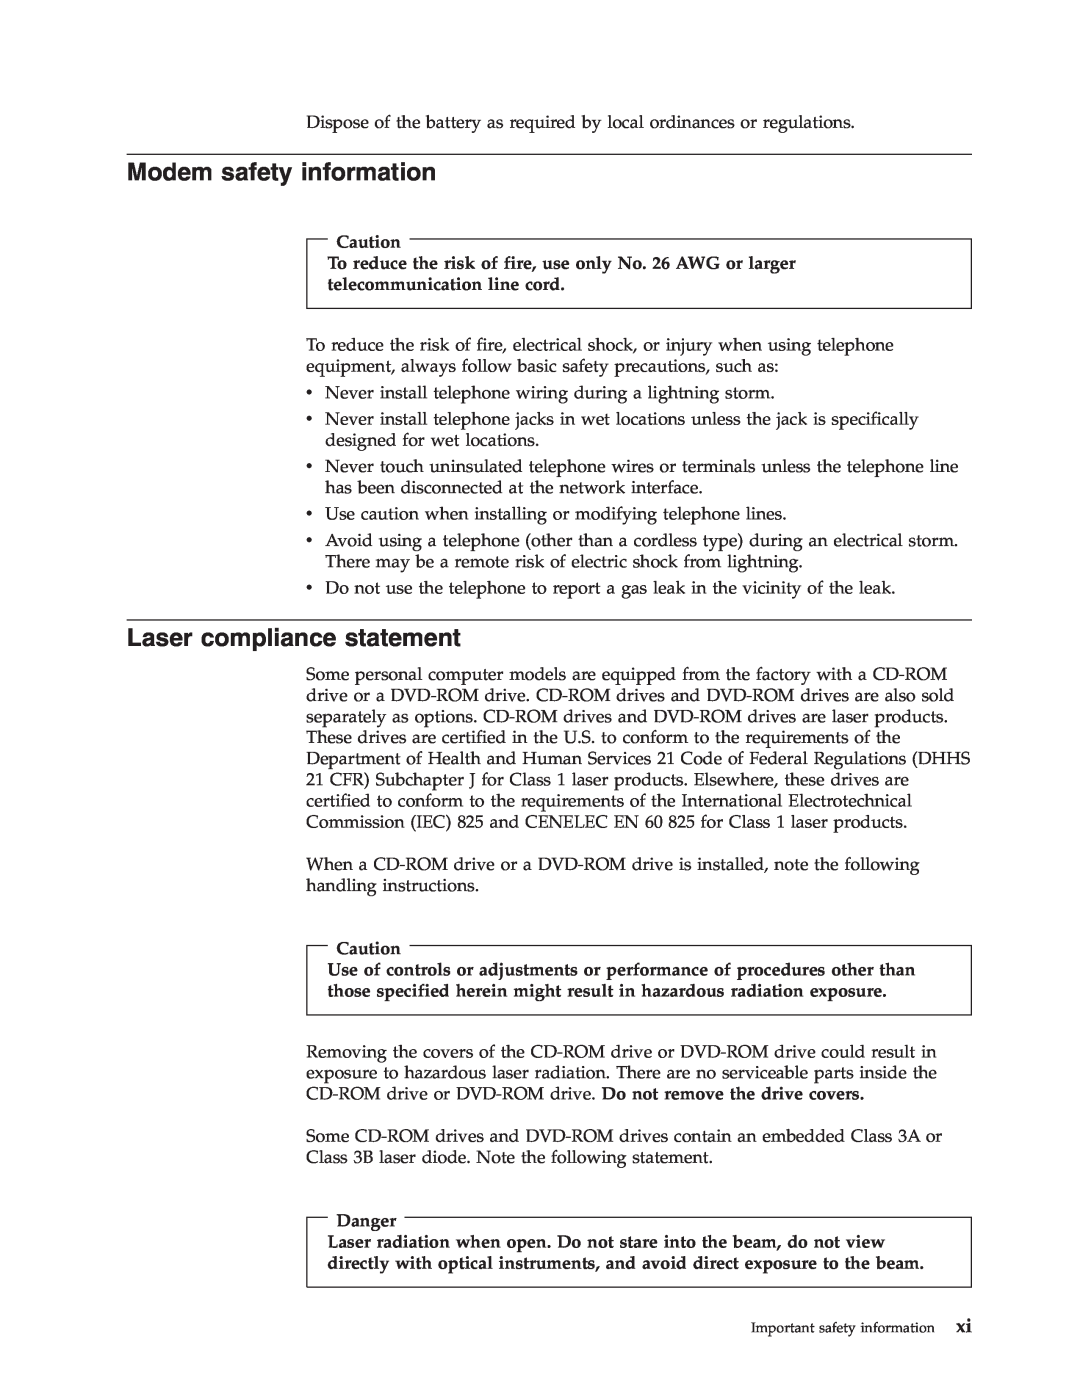 Lenovo 8457, 8455, 8453, 8454, 8459, 8460, 8458, 8456 manual Modem safety information, Laser compliance statement 